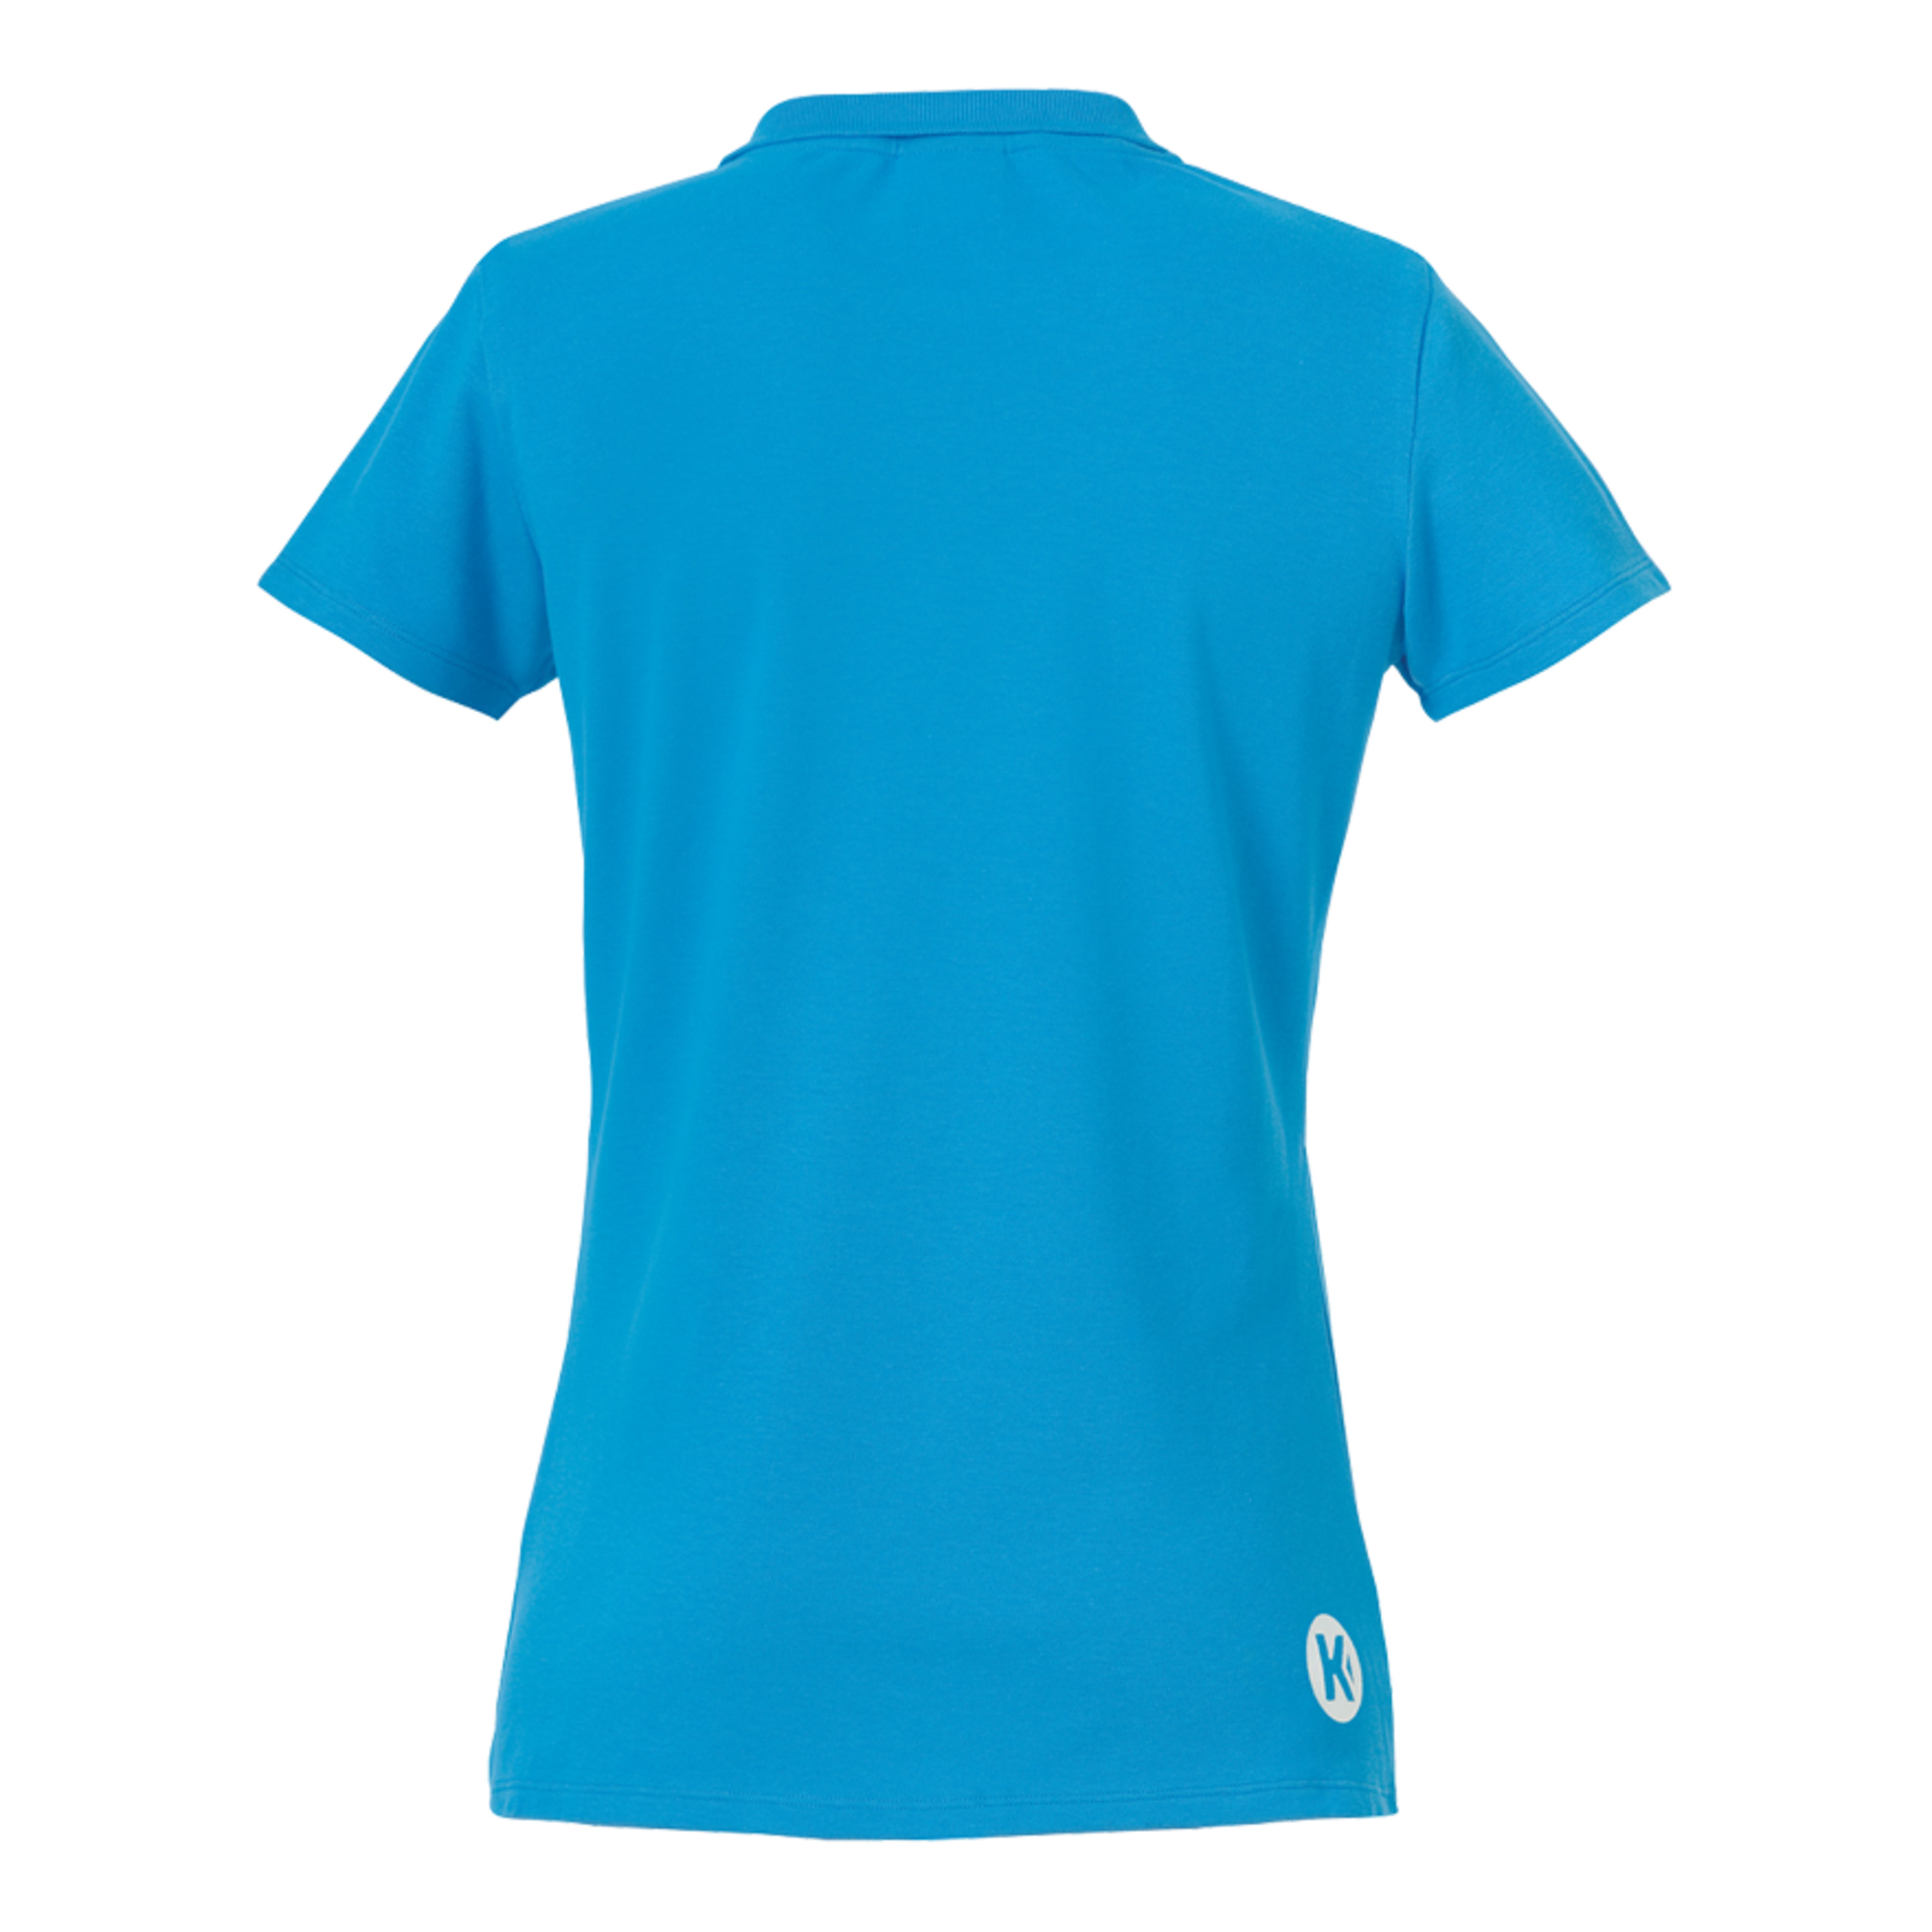 Polo Shirt De Mujer Kempa Azul Kempa